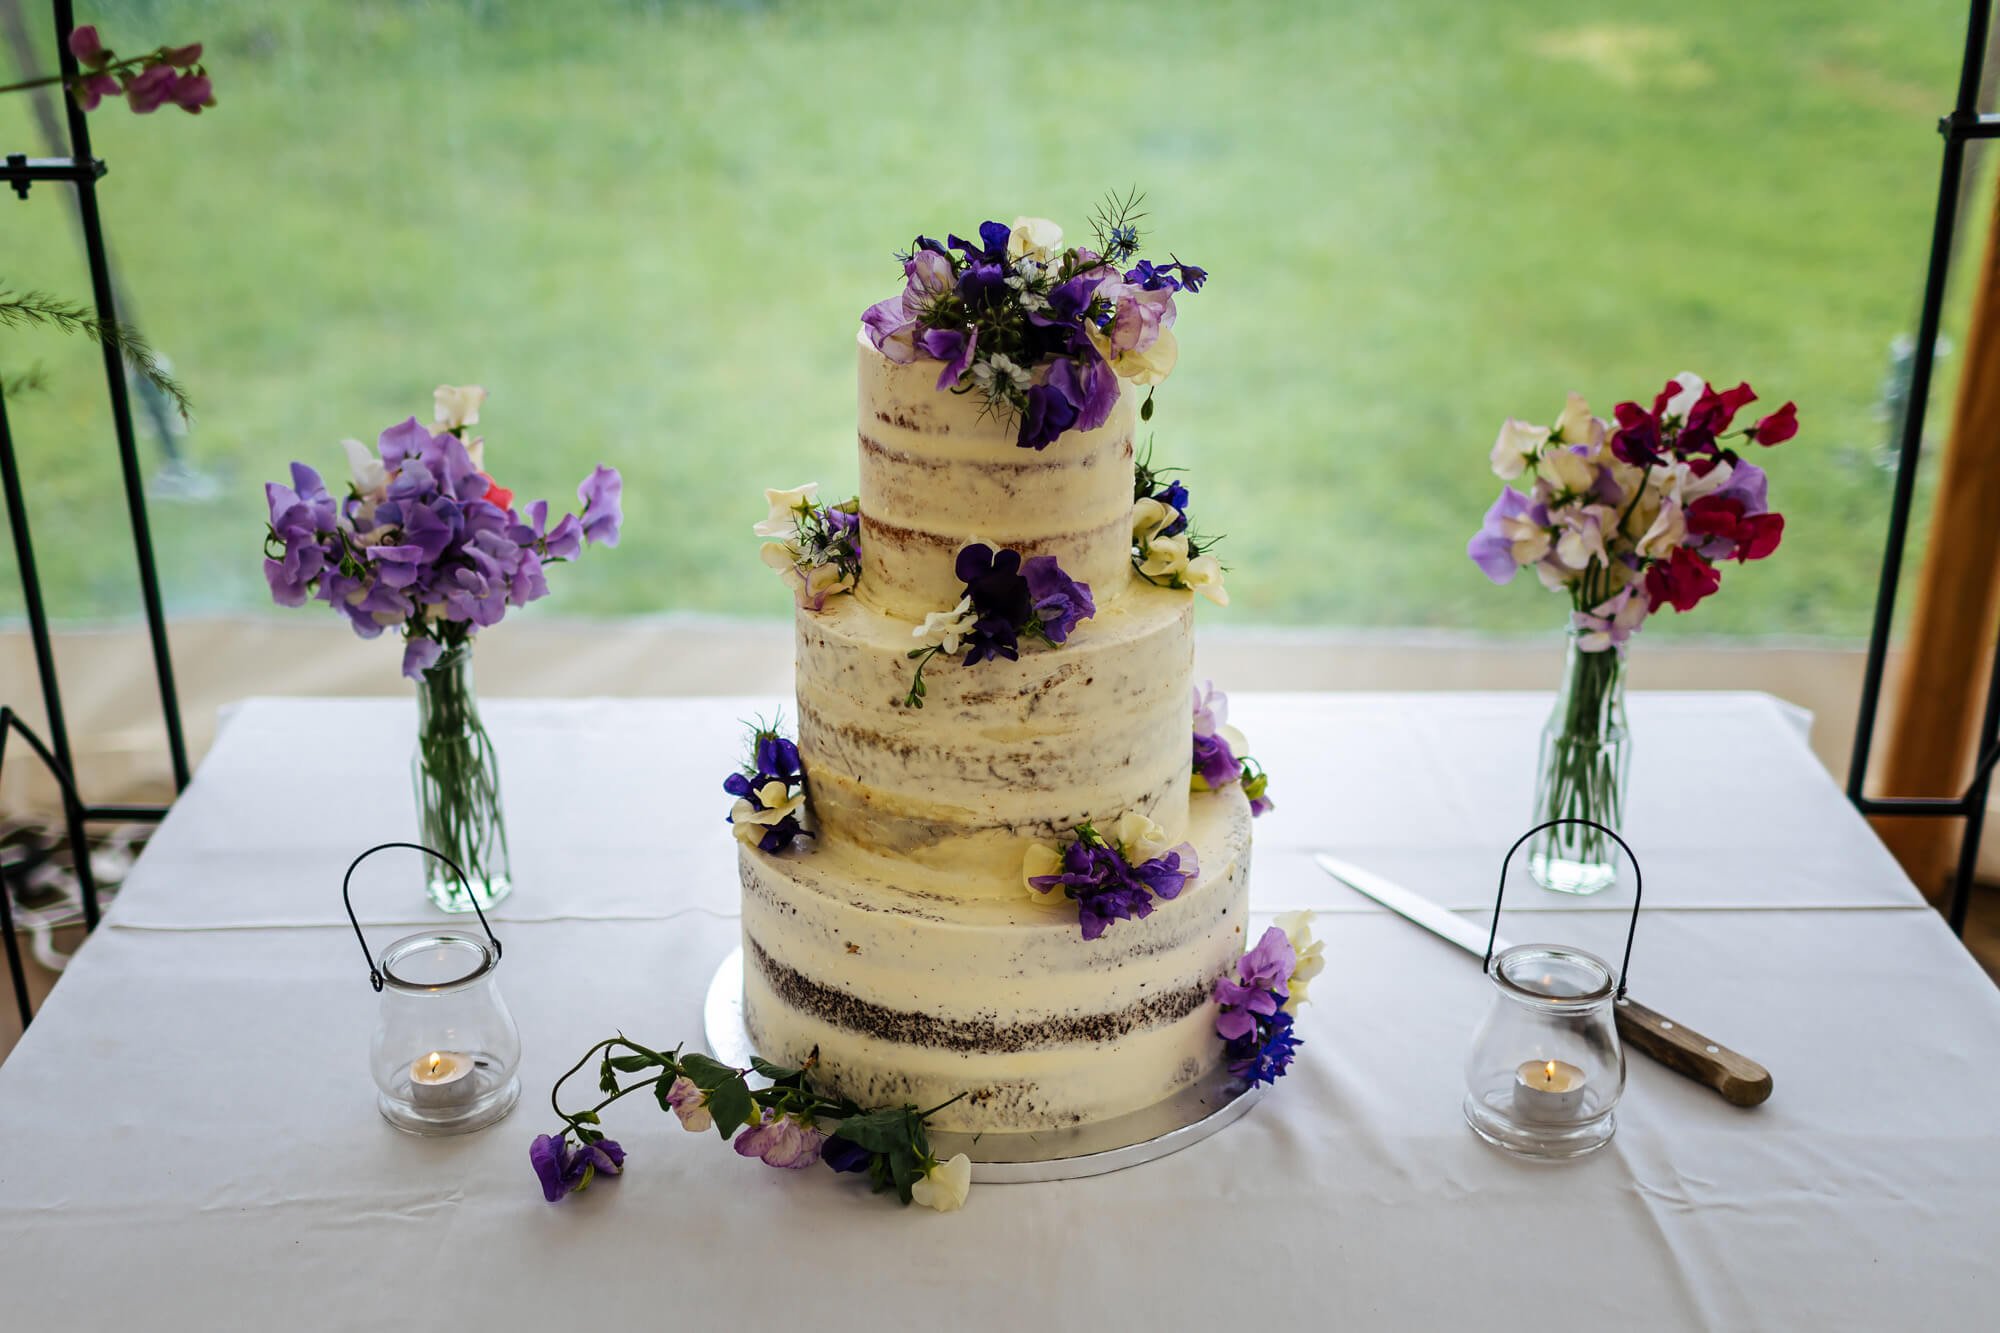 A beautiful wedding cake ready to be eaten